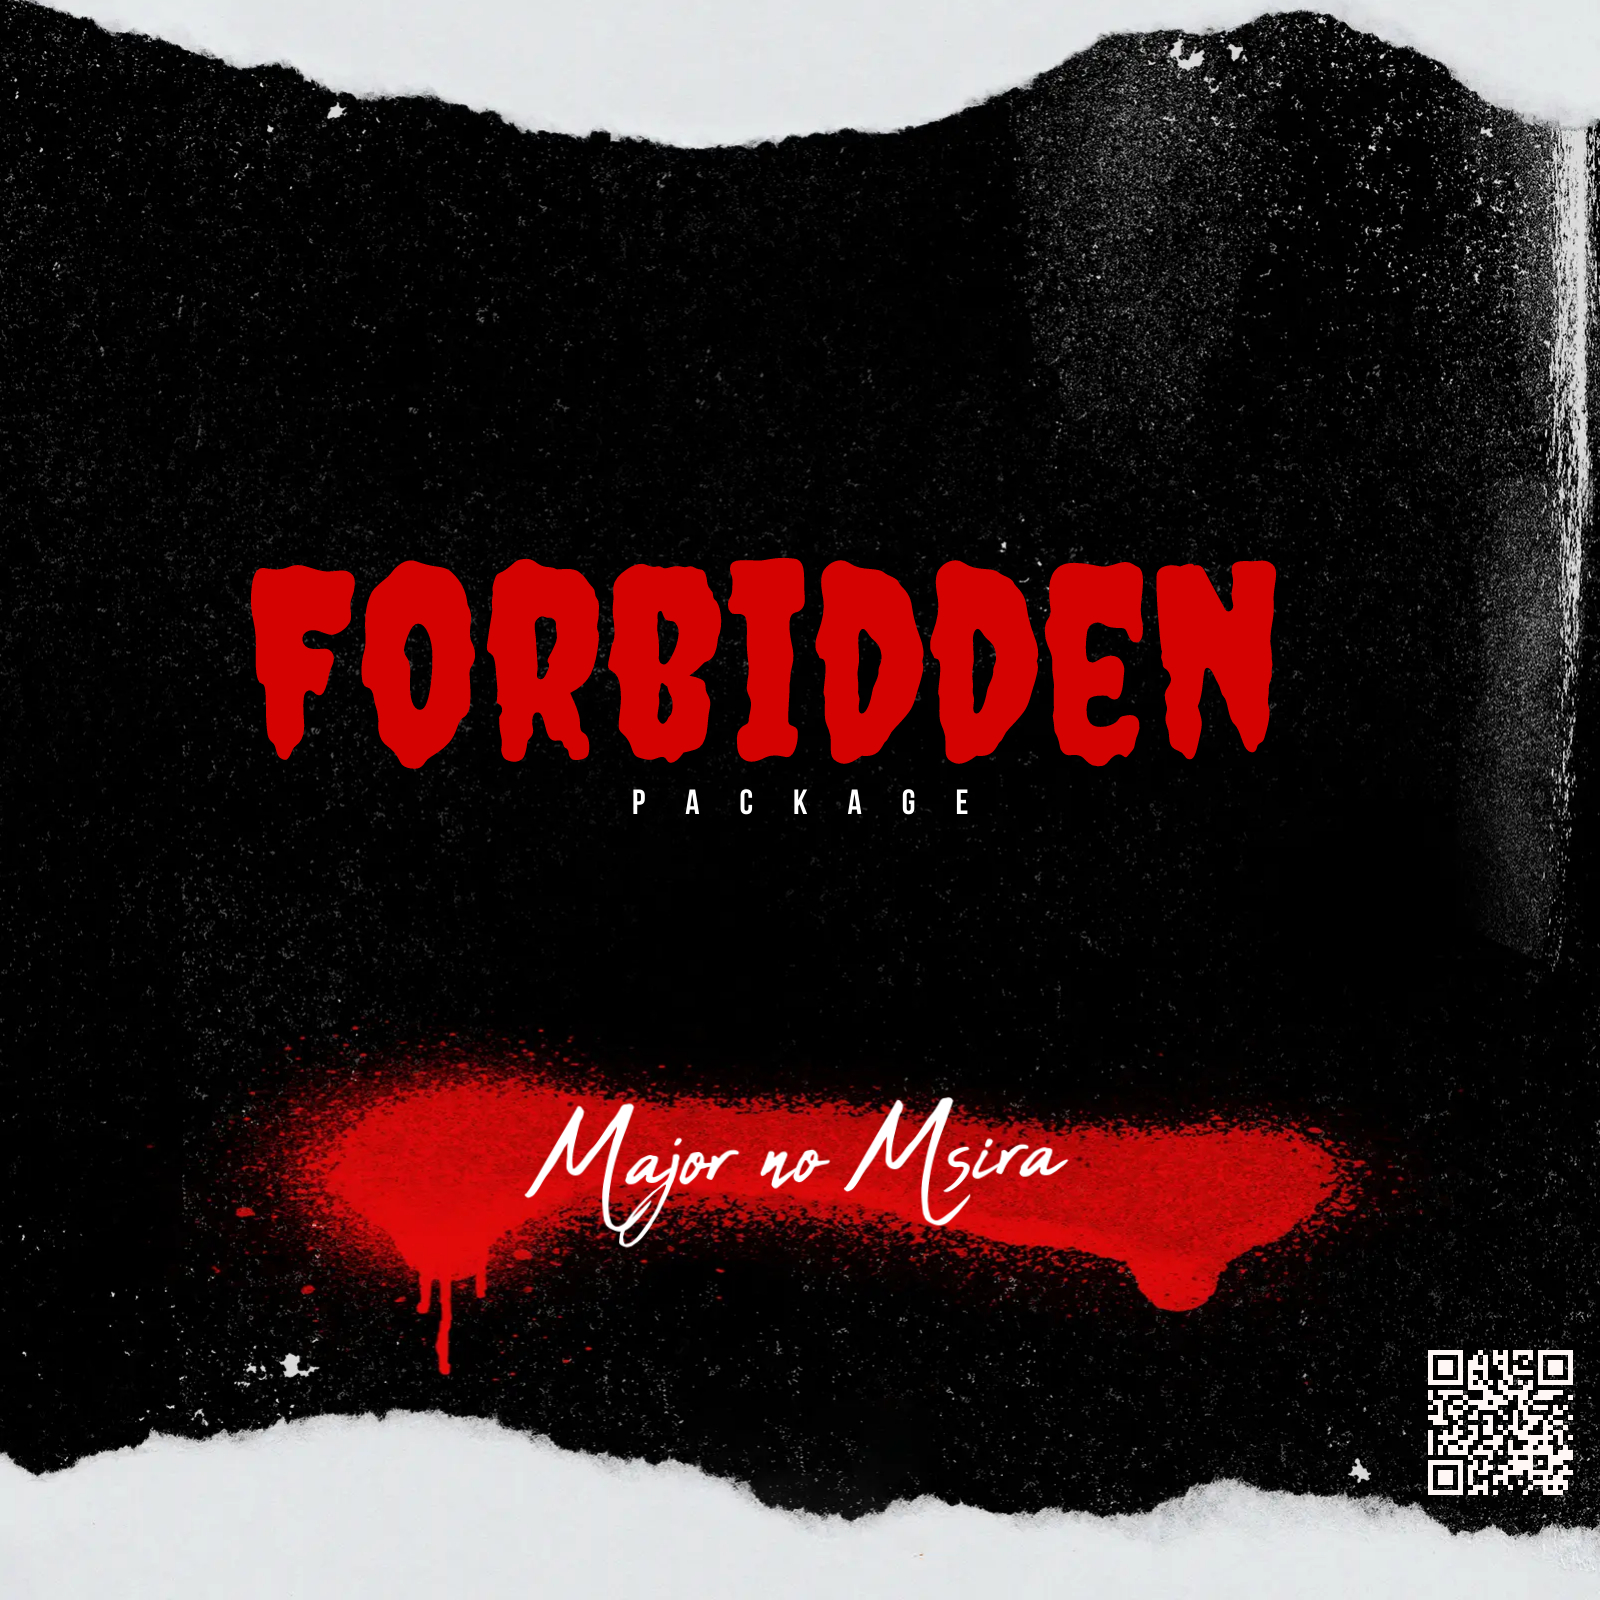 Forbidden Package - Major no Msira